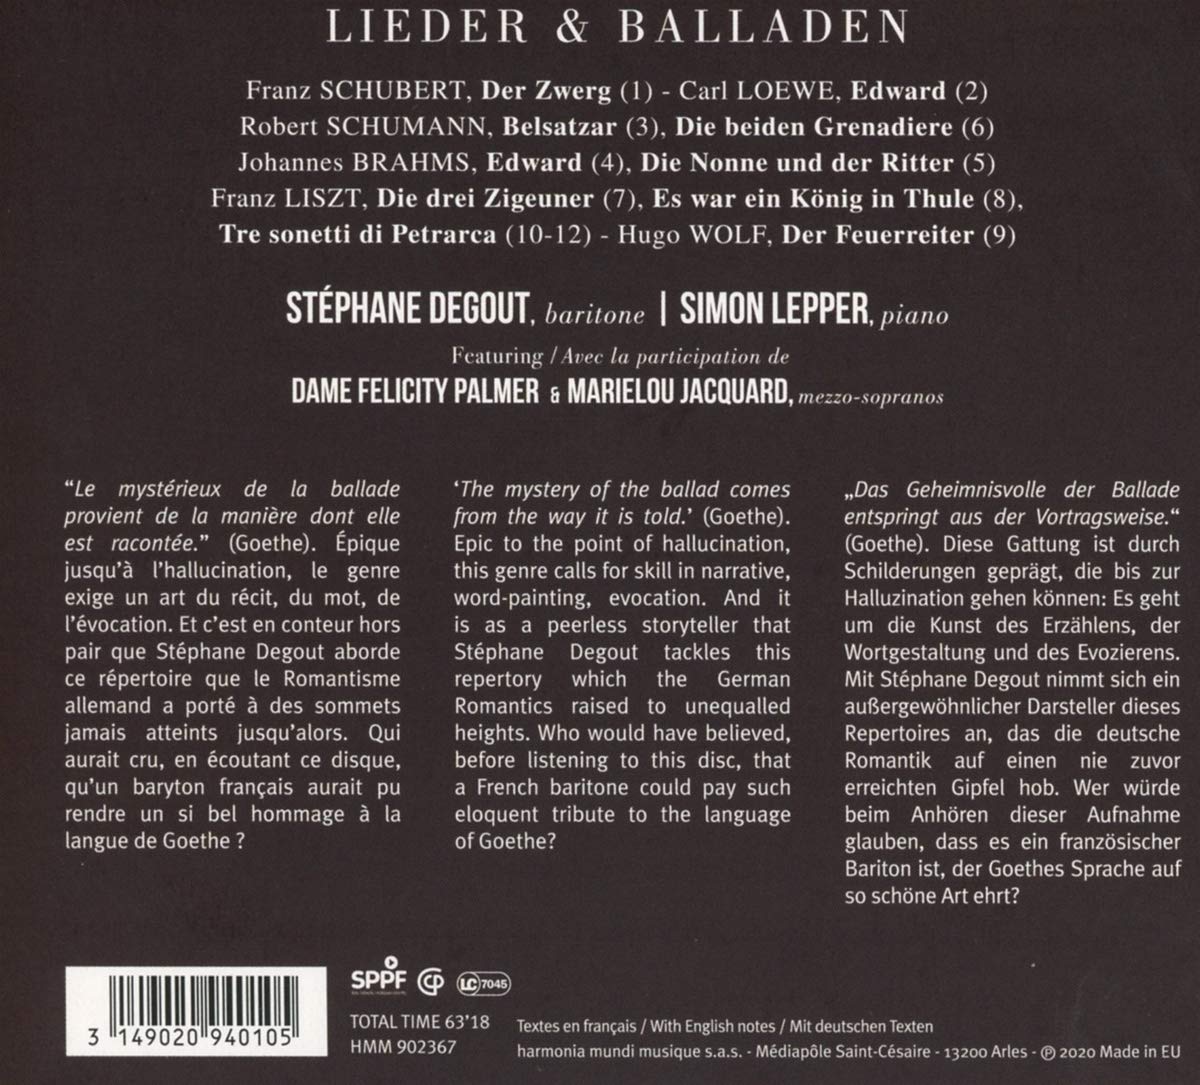 Stephane Degout 에픽 - 독일어 가곡과 발라드 (Epic: Lieder & Balladen)